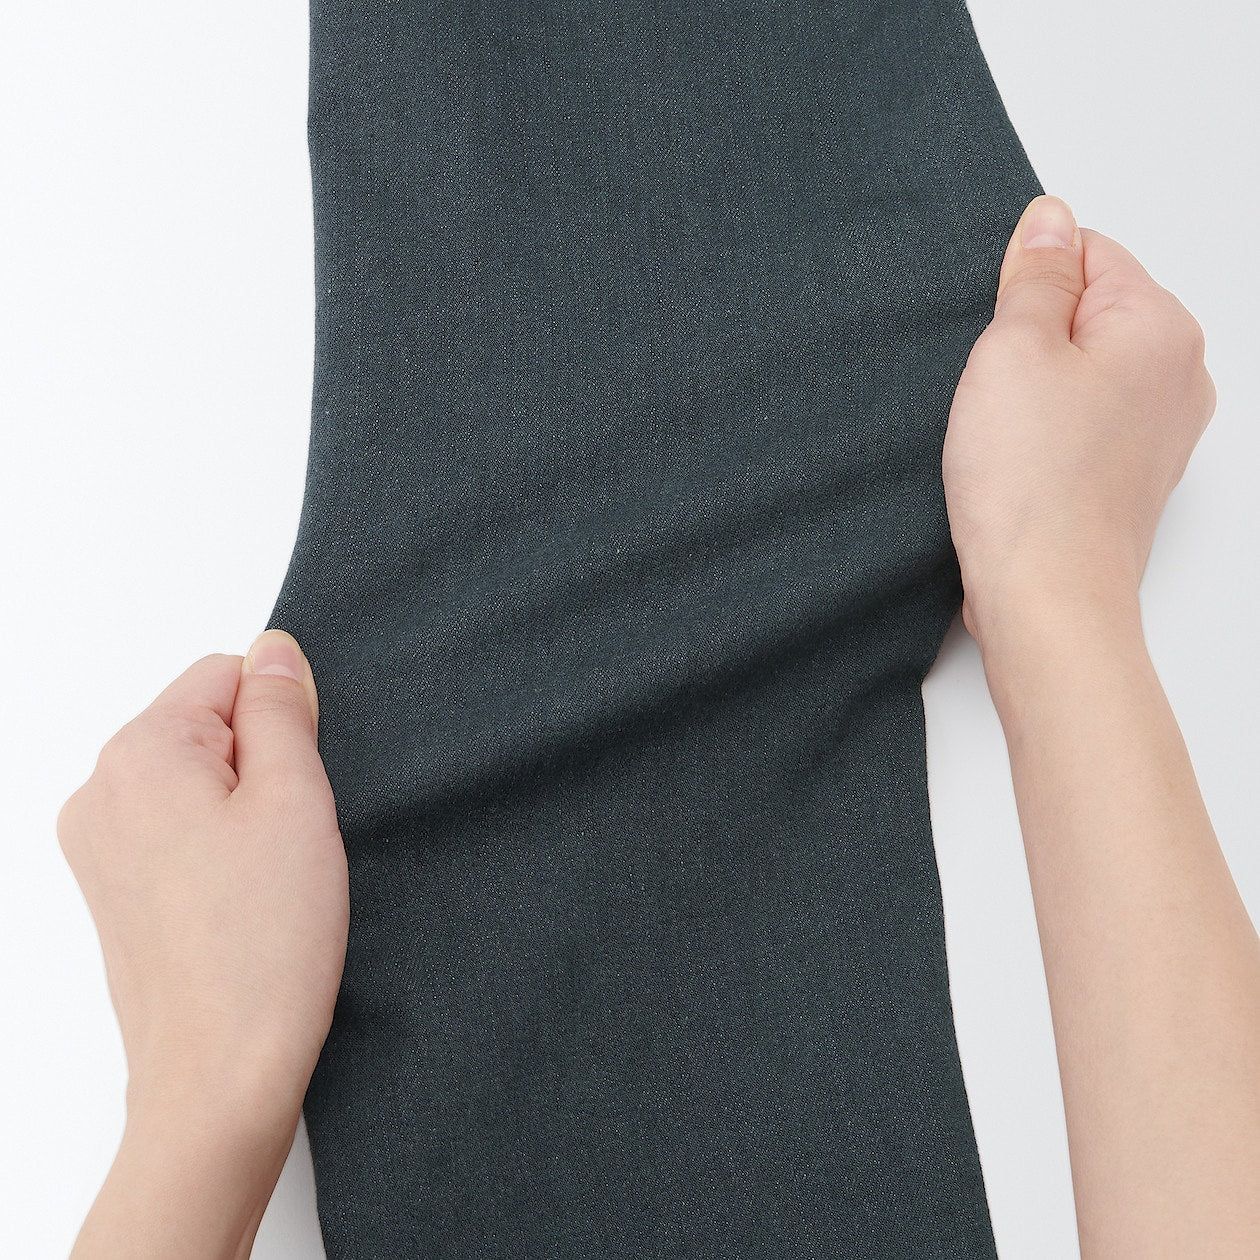 Men's Super Stretch Denim Skinny Pants Charcoal Grey (L 32inch / 82cm)